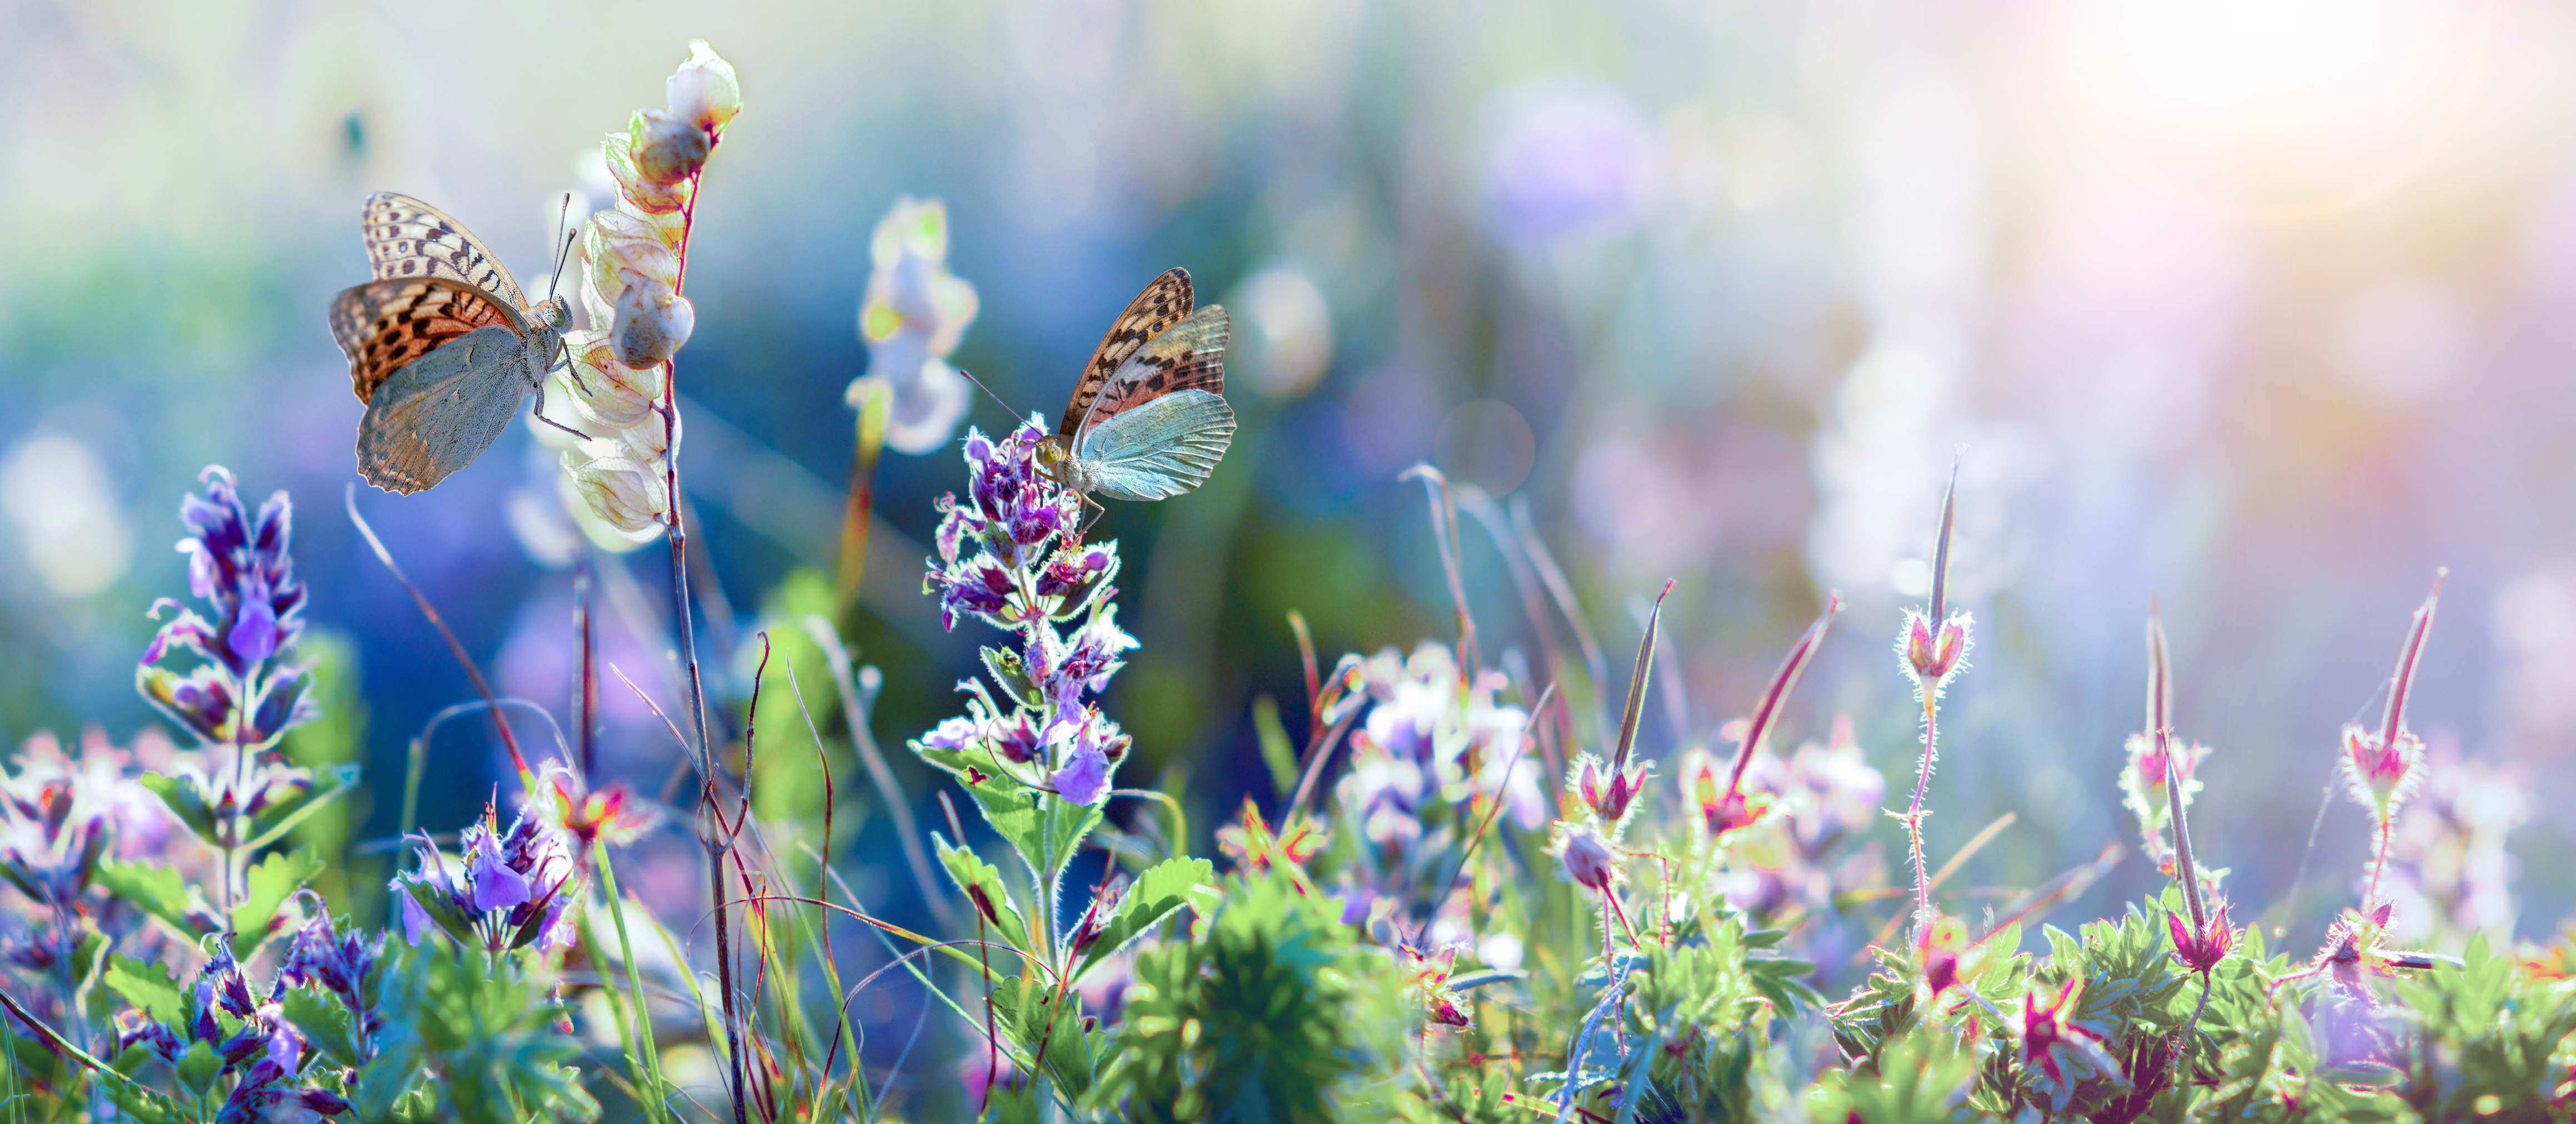 A wildflower meadow with butterflies.